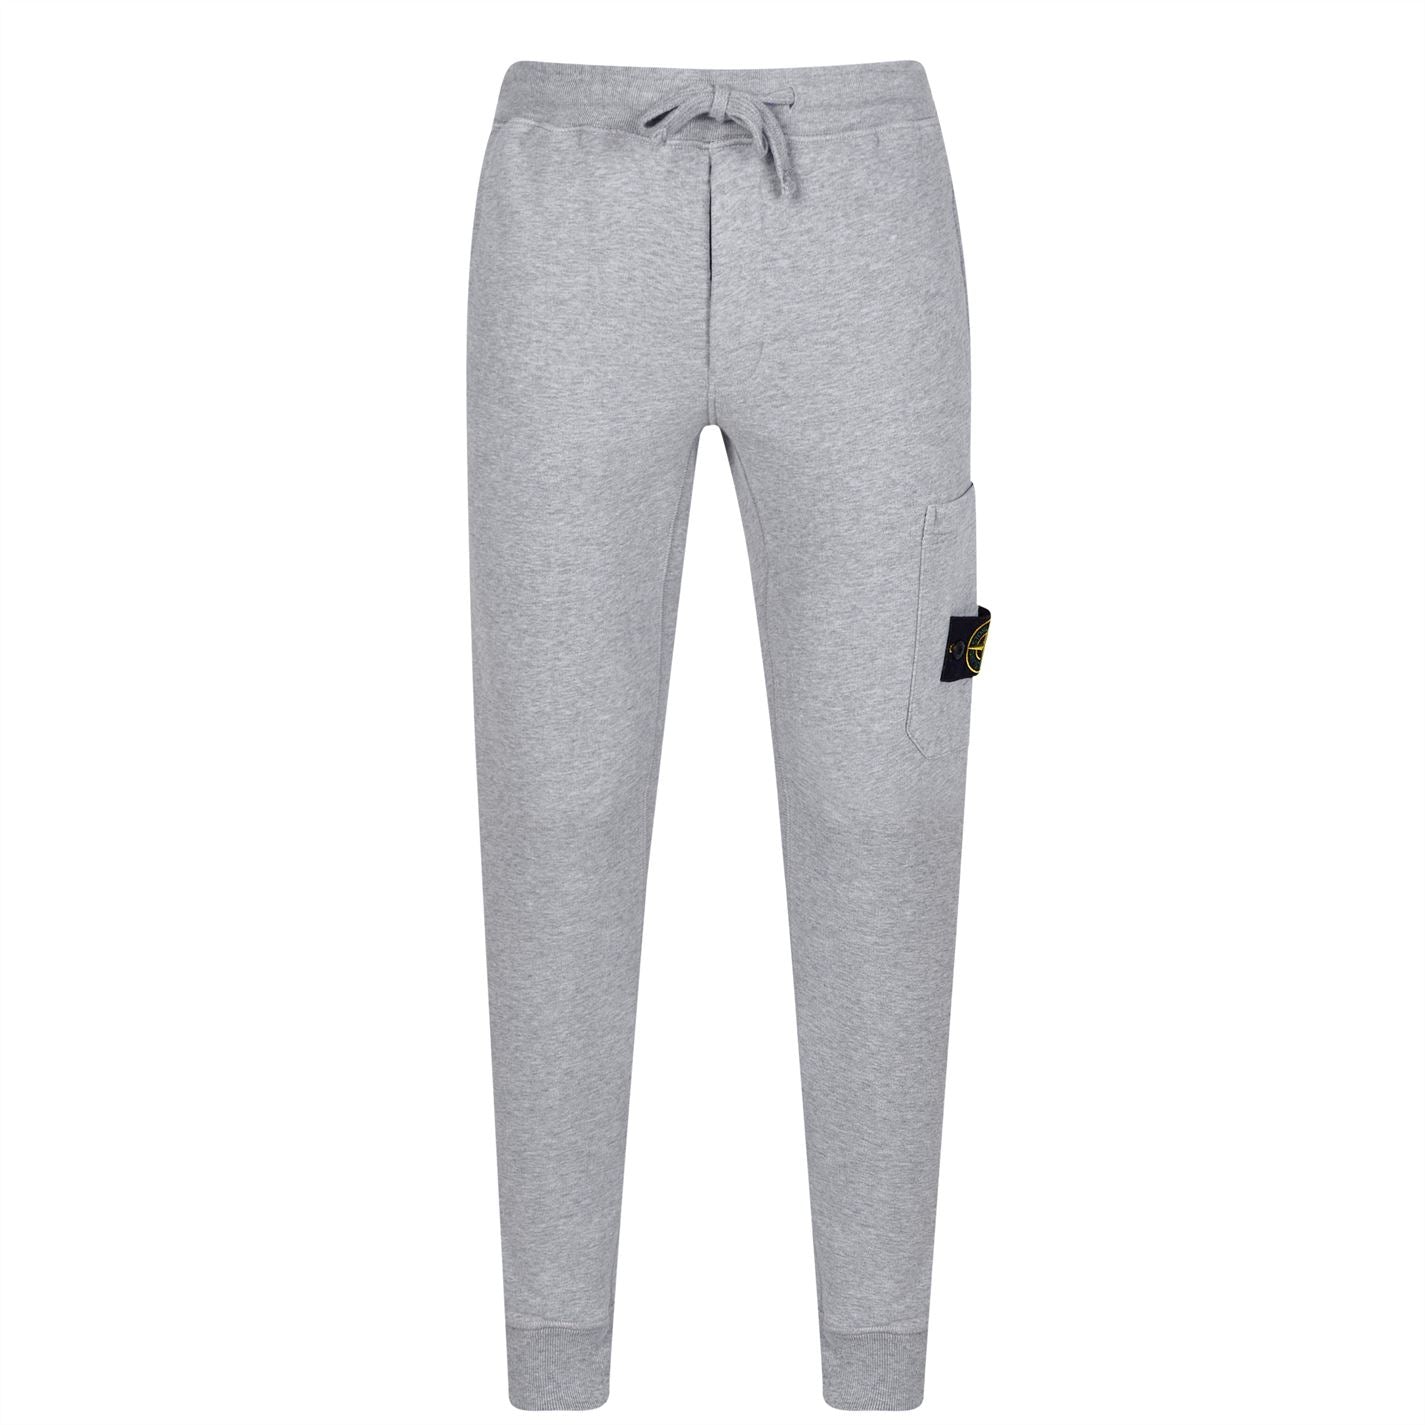 Stone Island Grey Cuffed Sweatpants - DANYOUNGUK